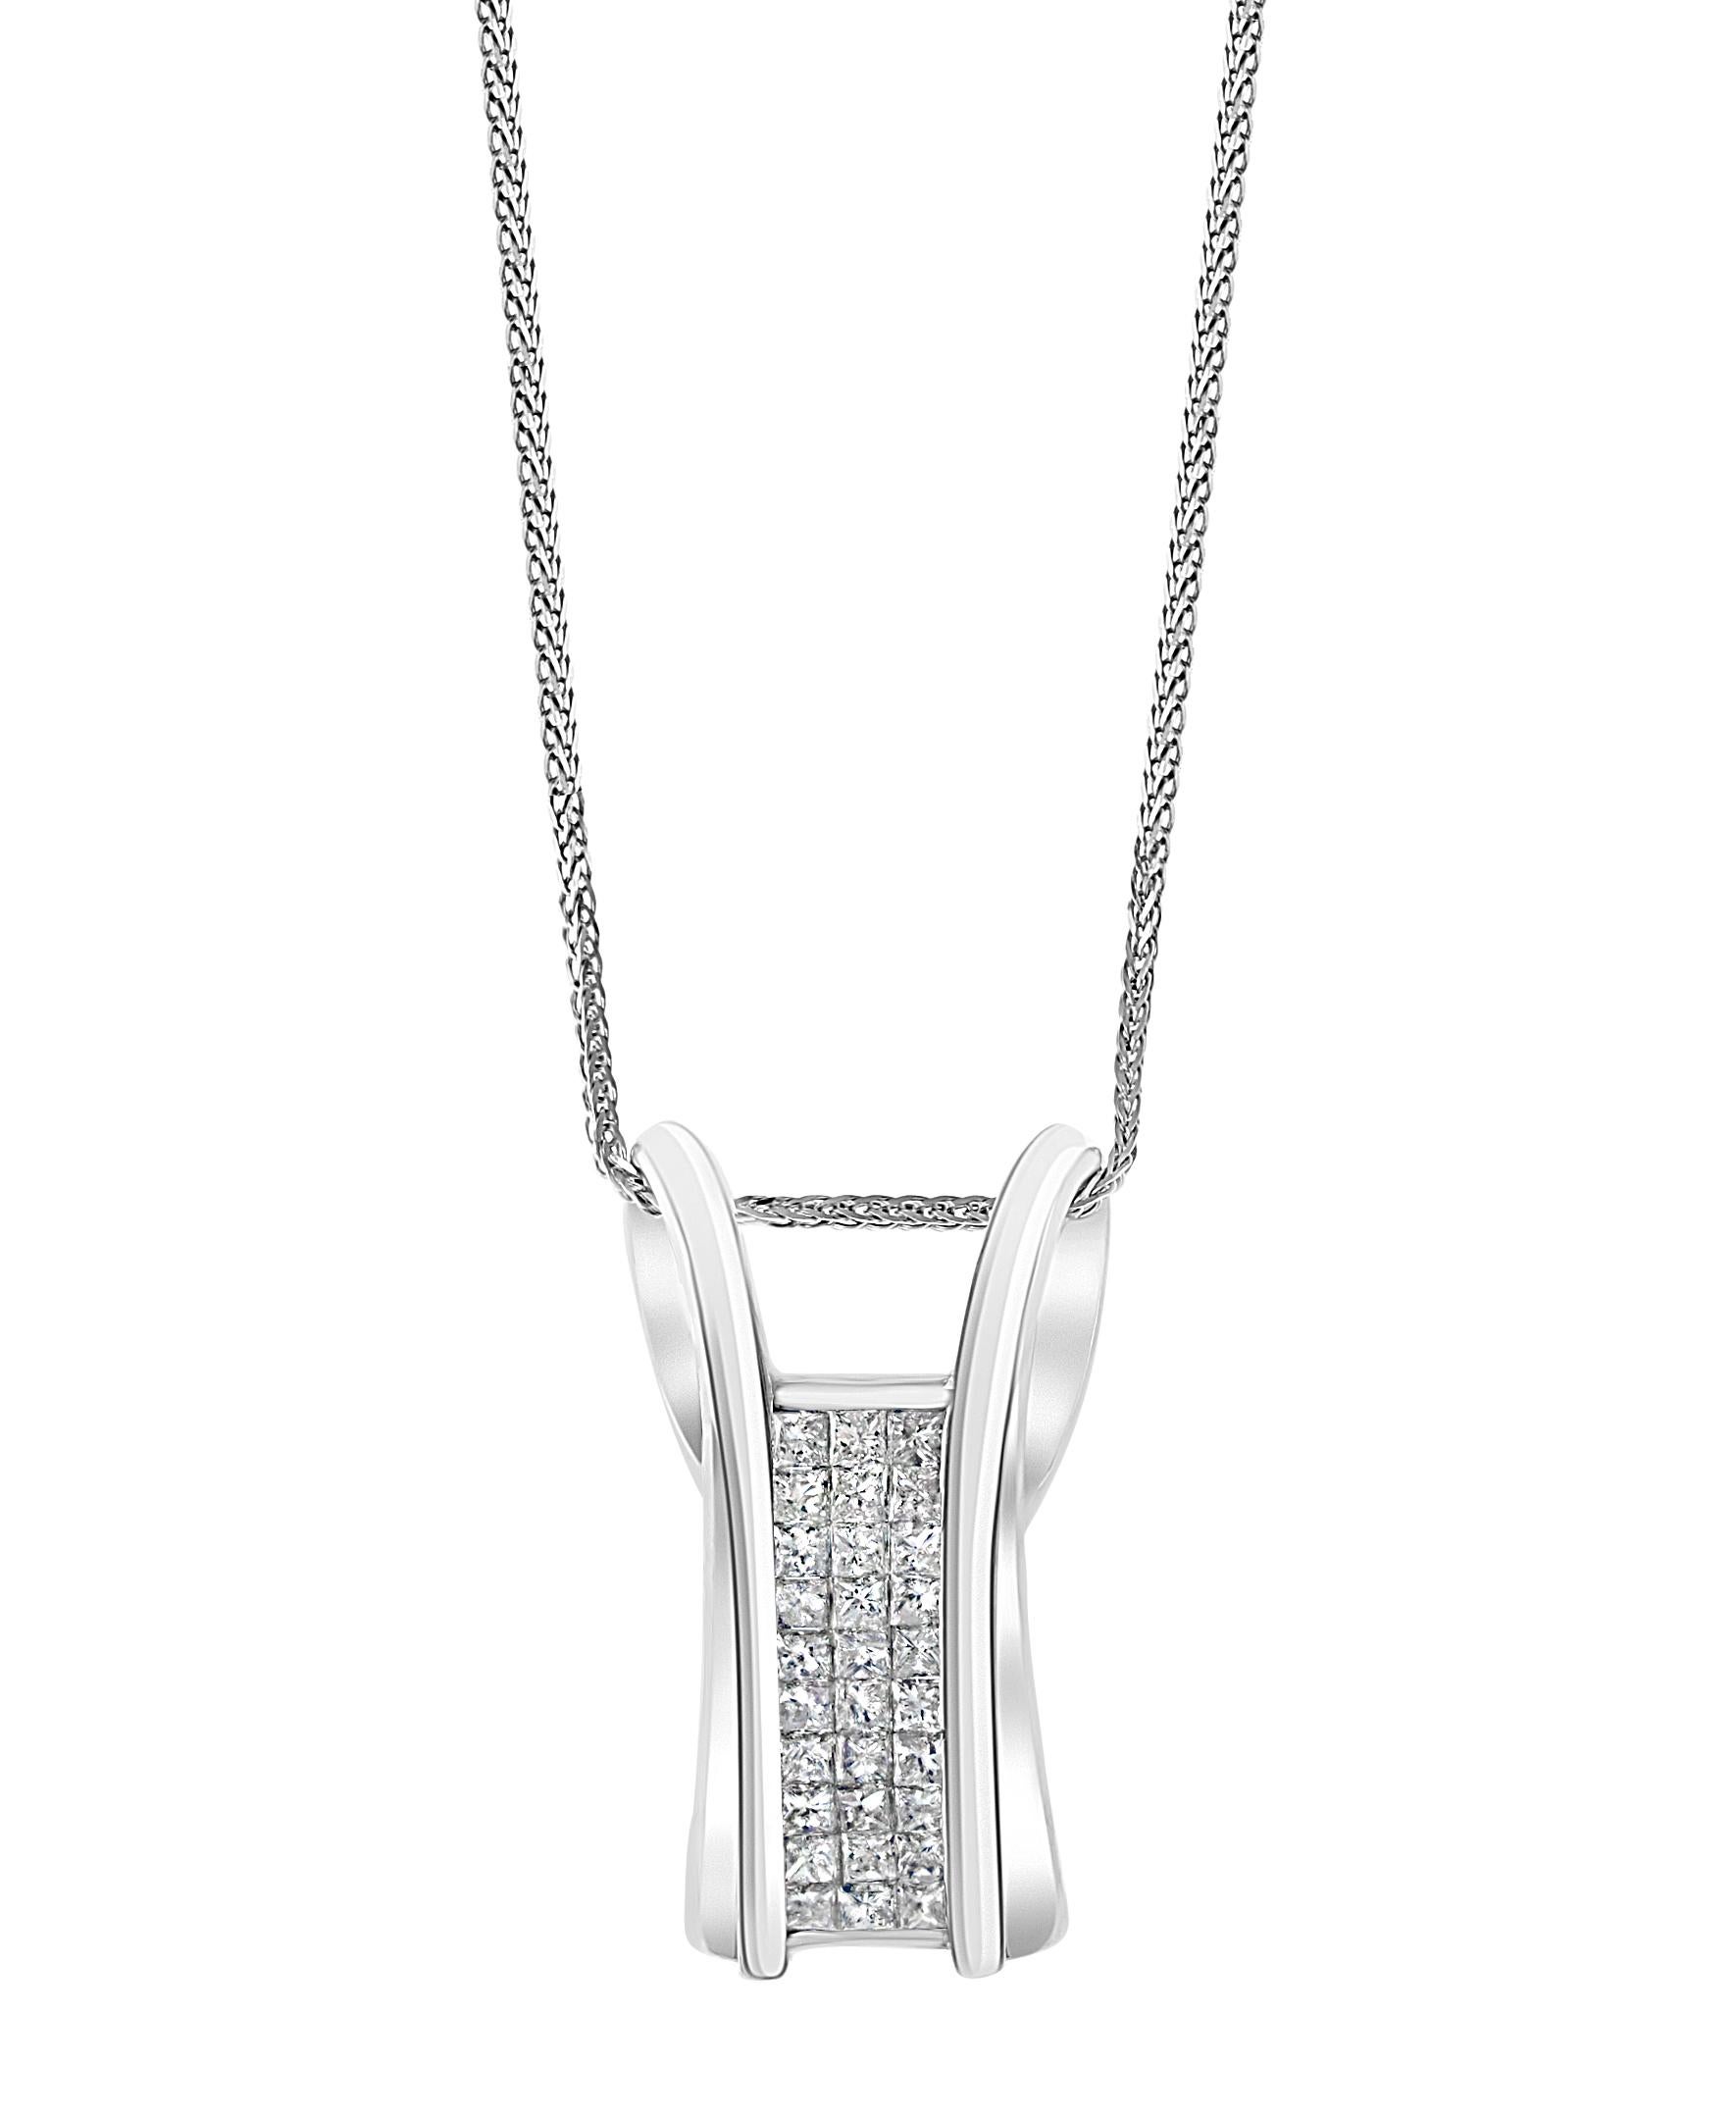 2.2 Carat Princess Cut Diamond Pendant/ Necklace 14 Karat White Gold with Chain 16